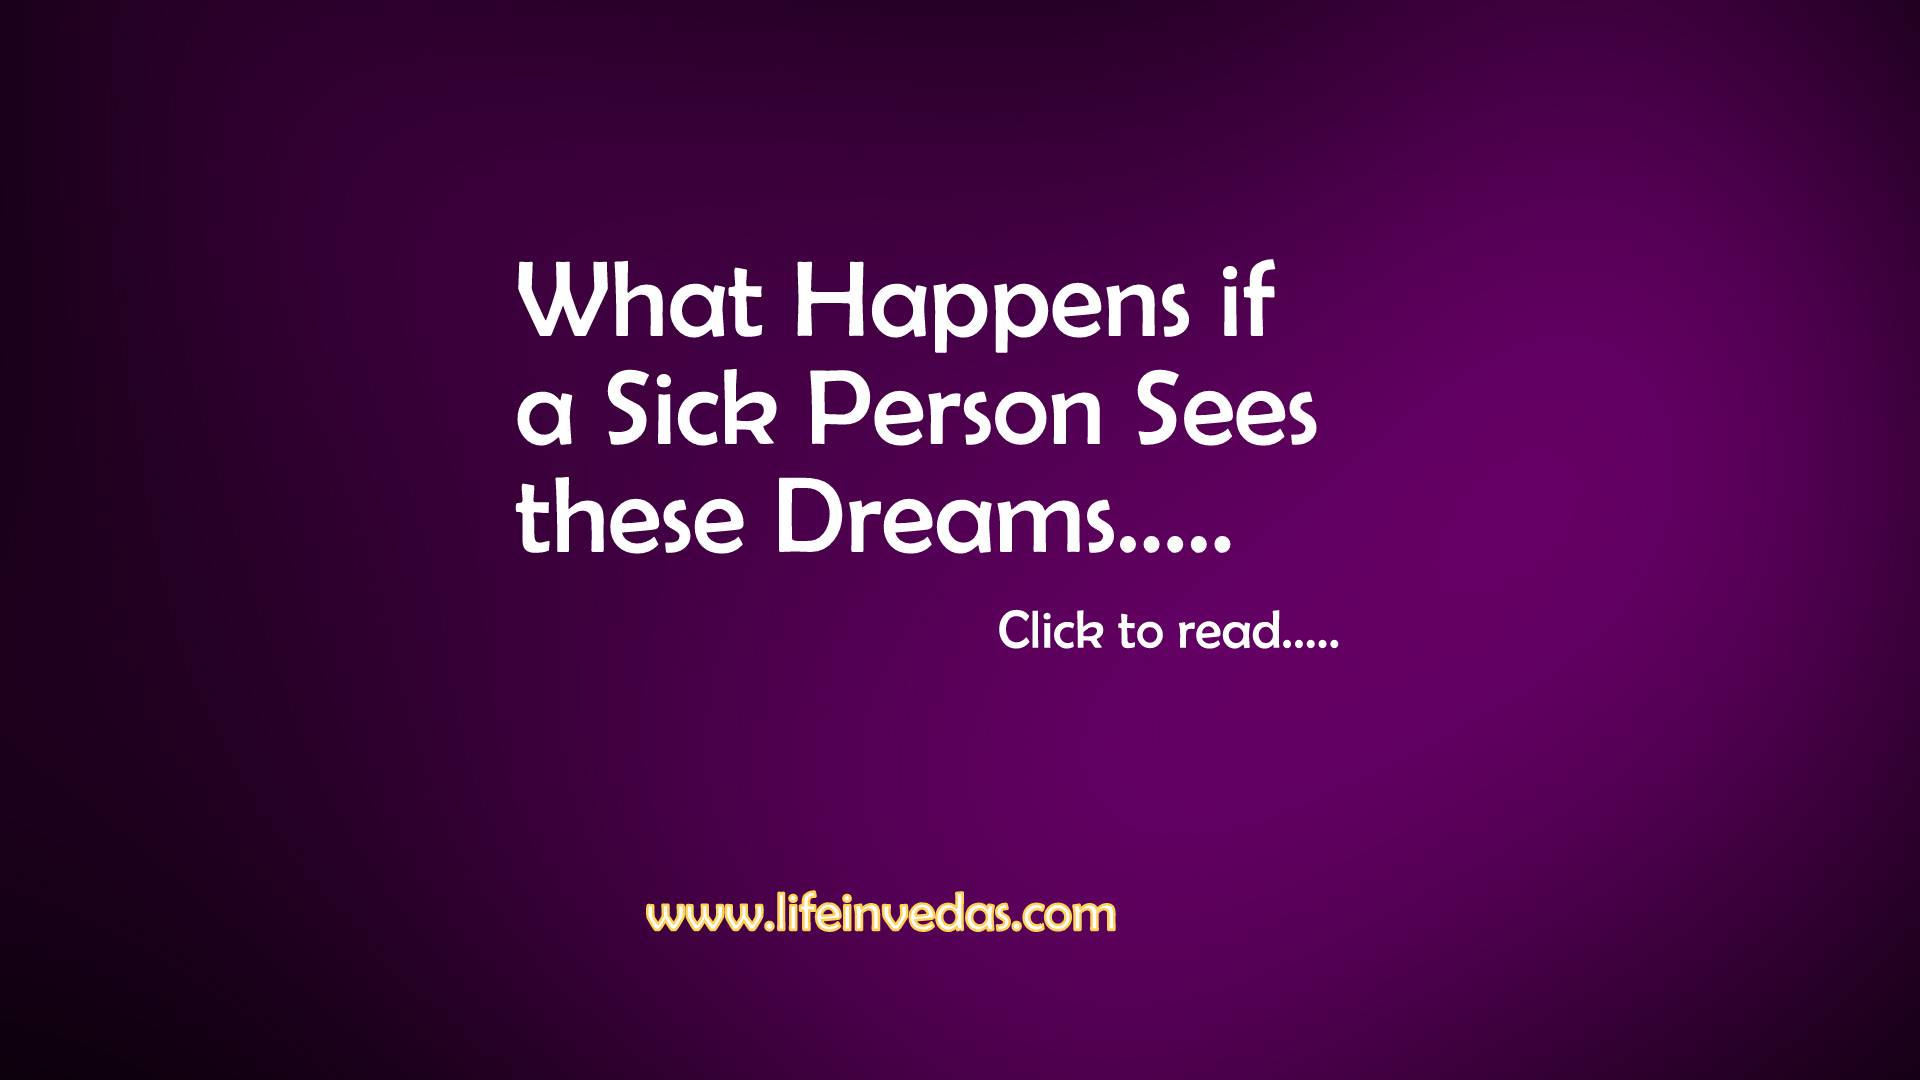 Dreams of illness